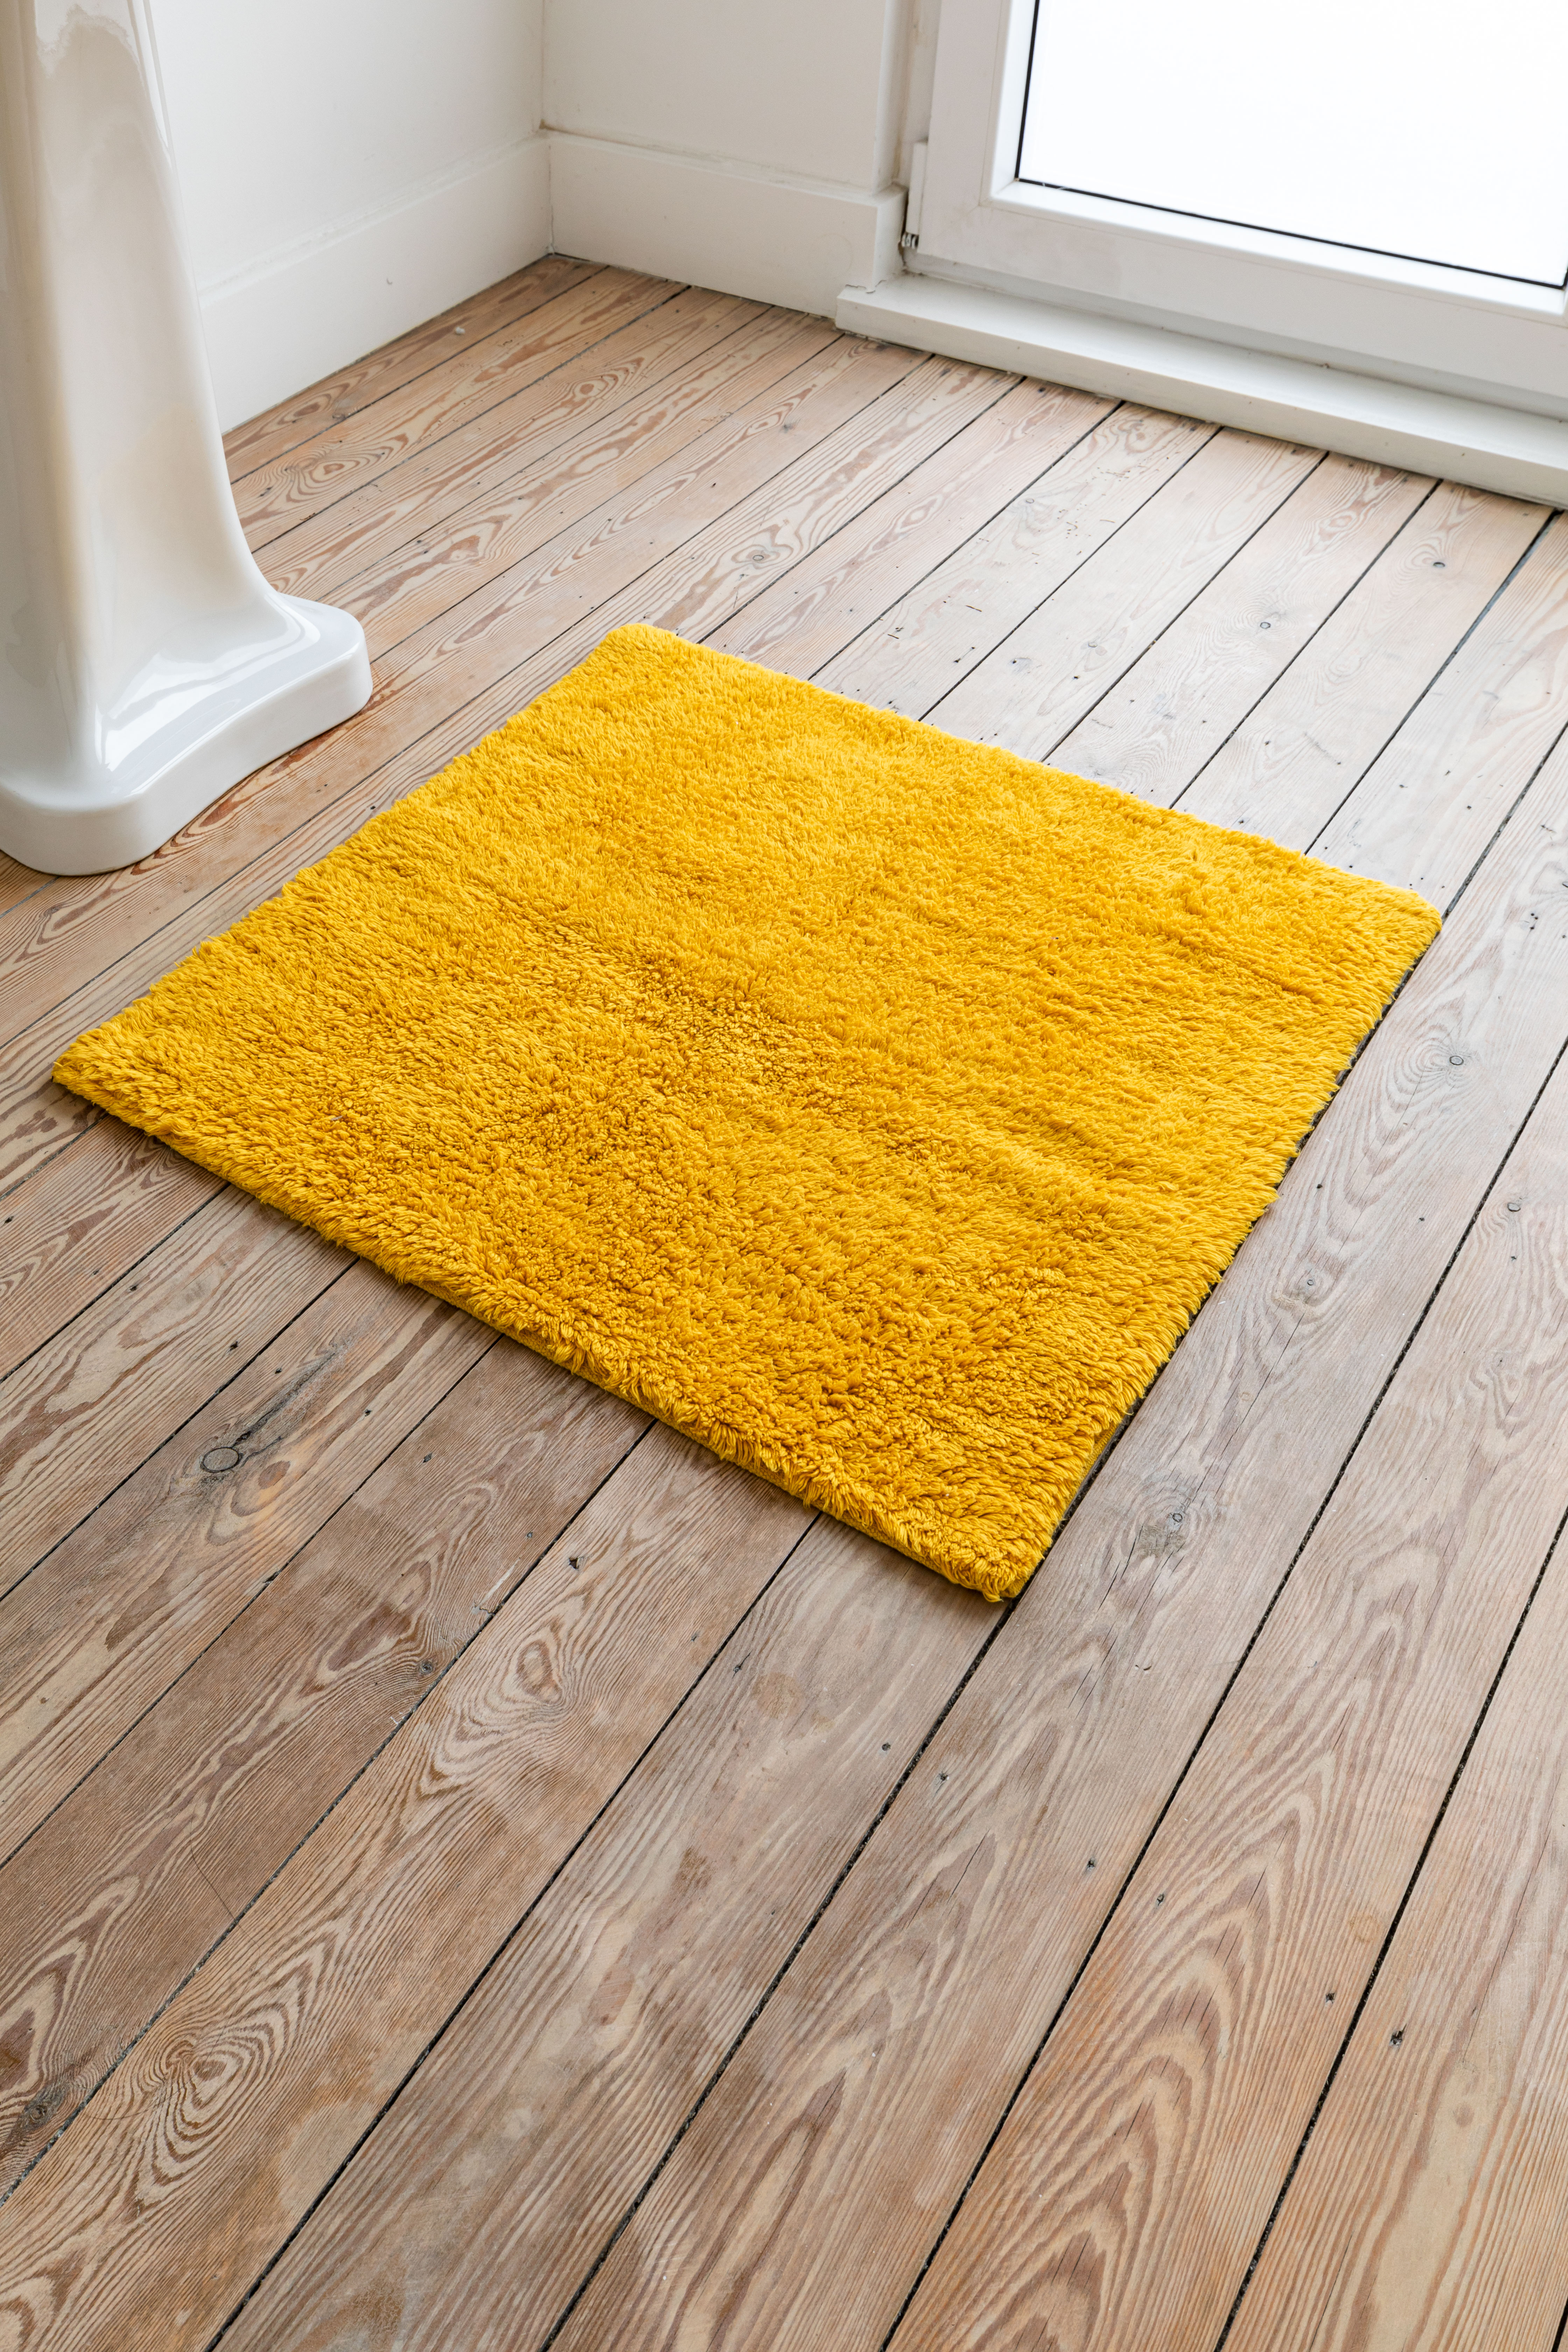 RIVA bath carpet - cotton anti-slip, 60x60cm, black